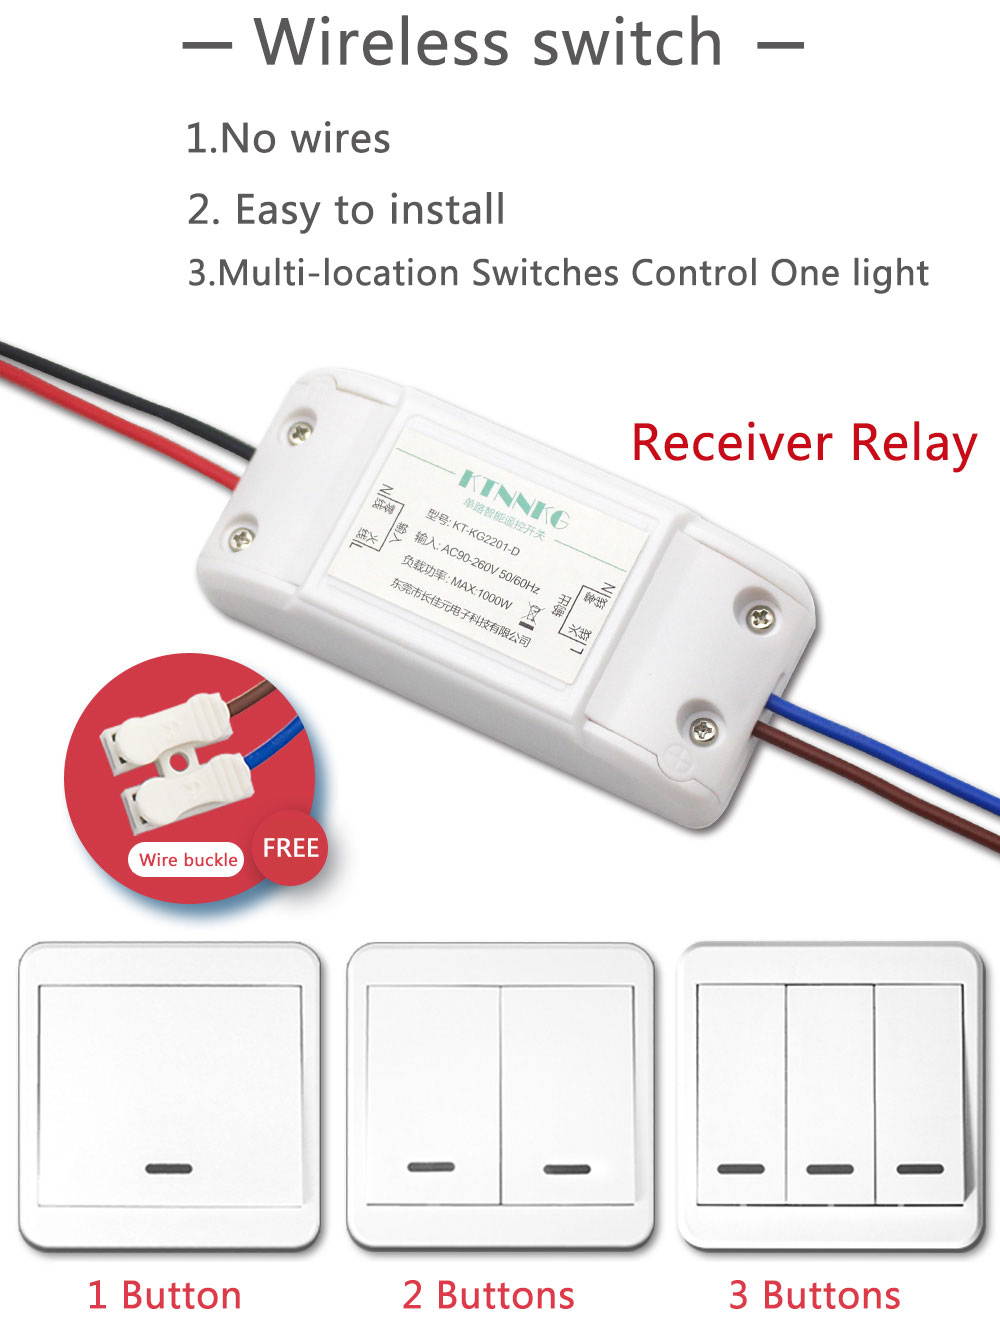 KTNNKG-Wireless-Light-Switch-Kit-For-Lamps-Fans-Appliances-433Mhz-RF-Receiver-Default-ON-1411047-2